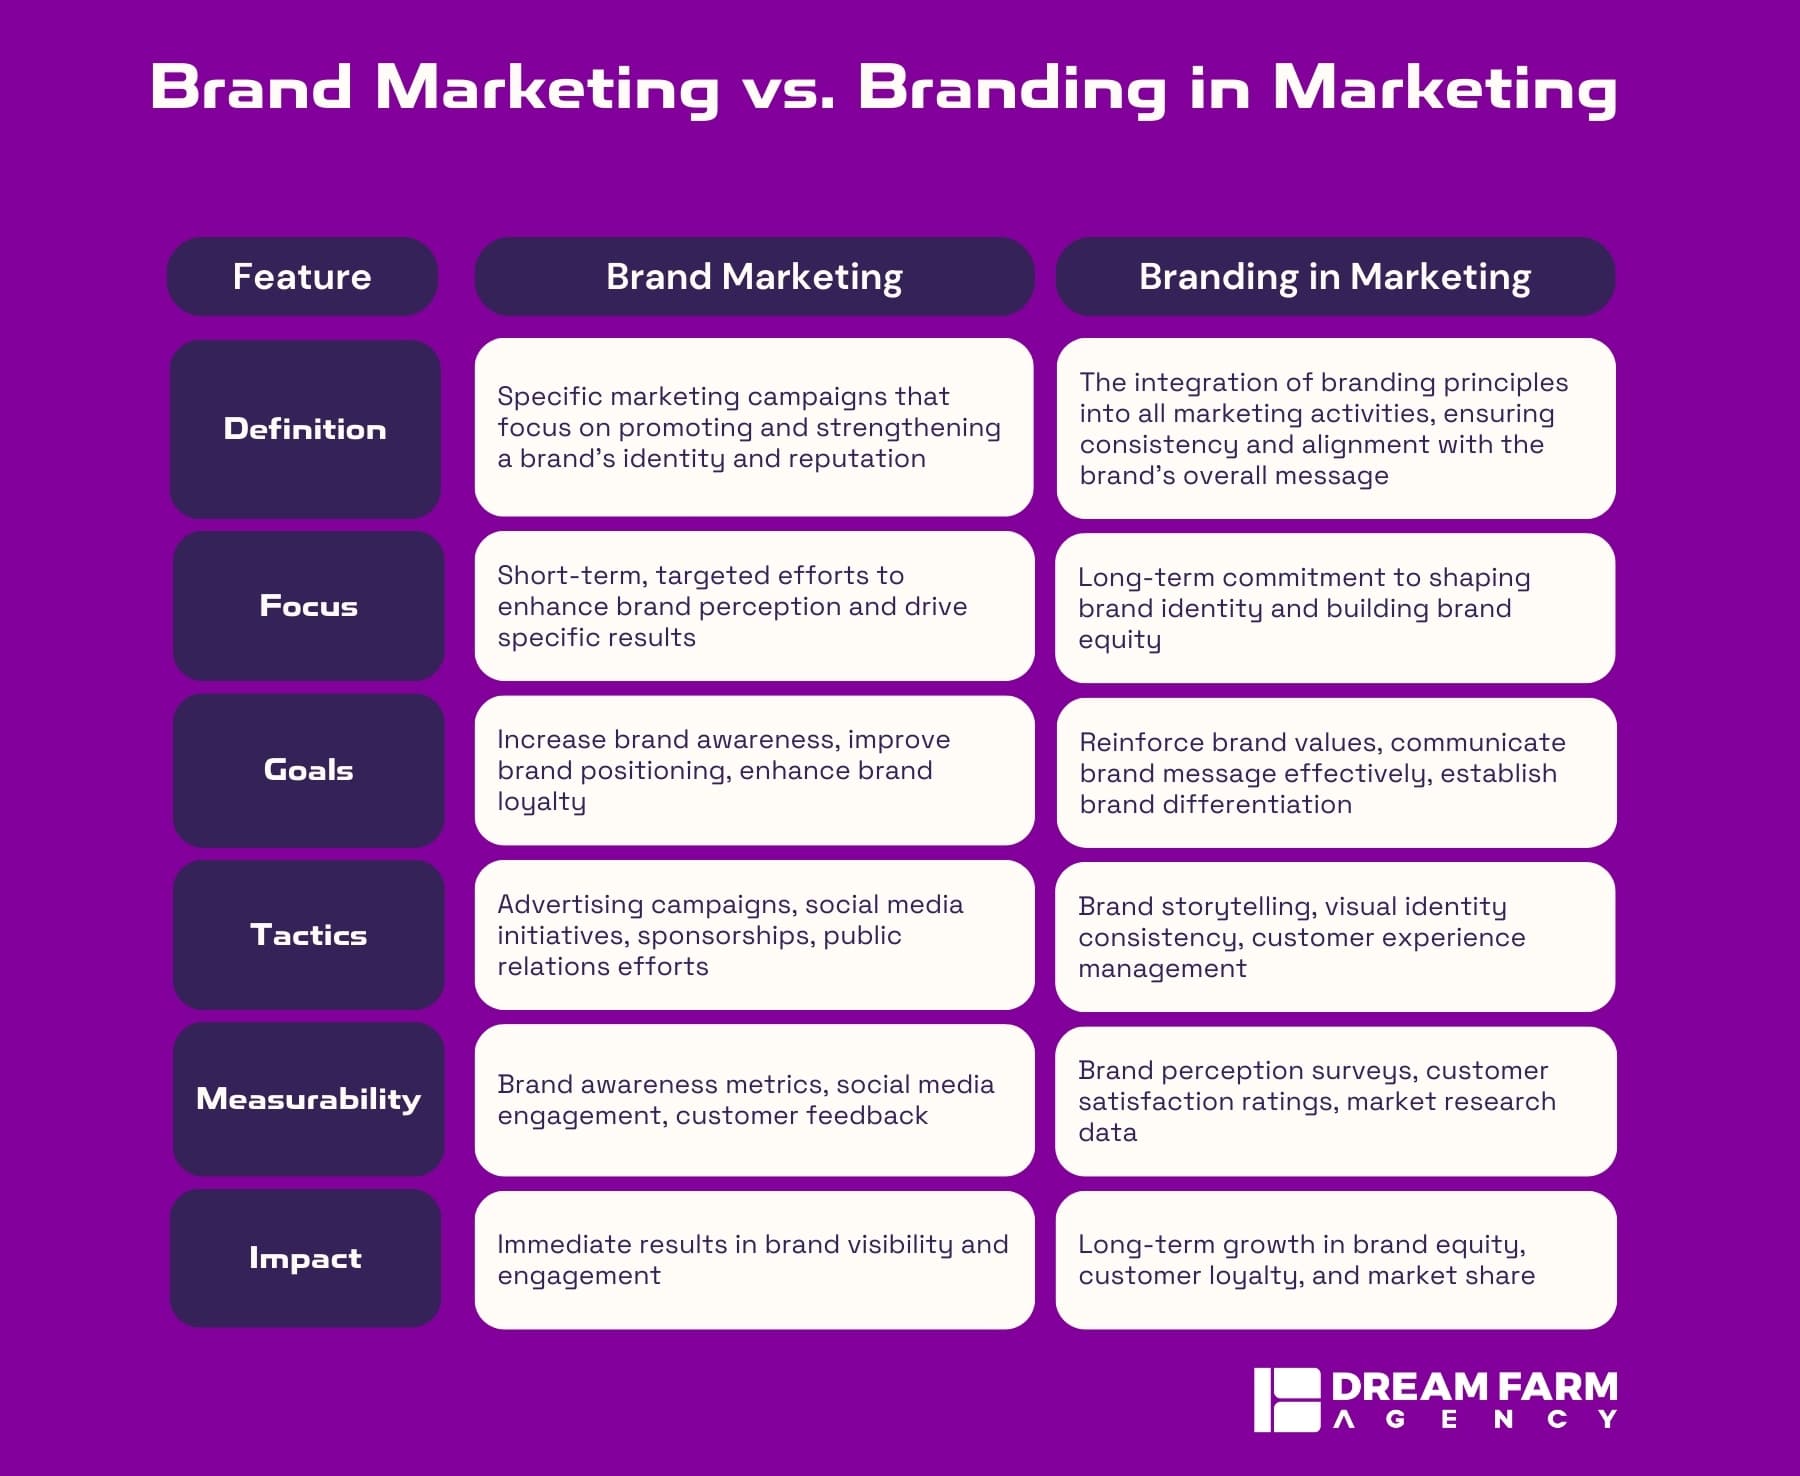 Branding-in-Marketing-vs-Brand-Marketing-infographic